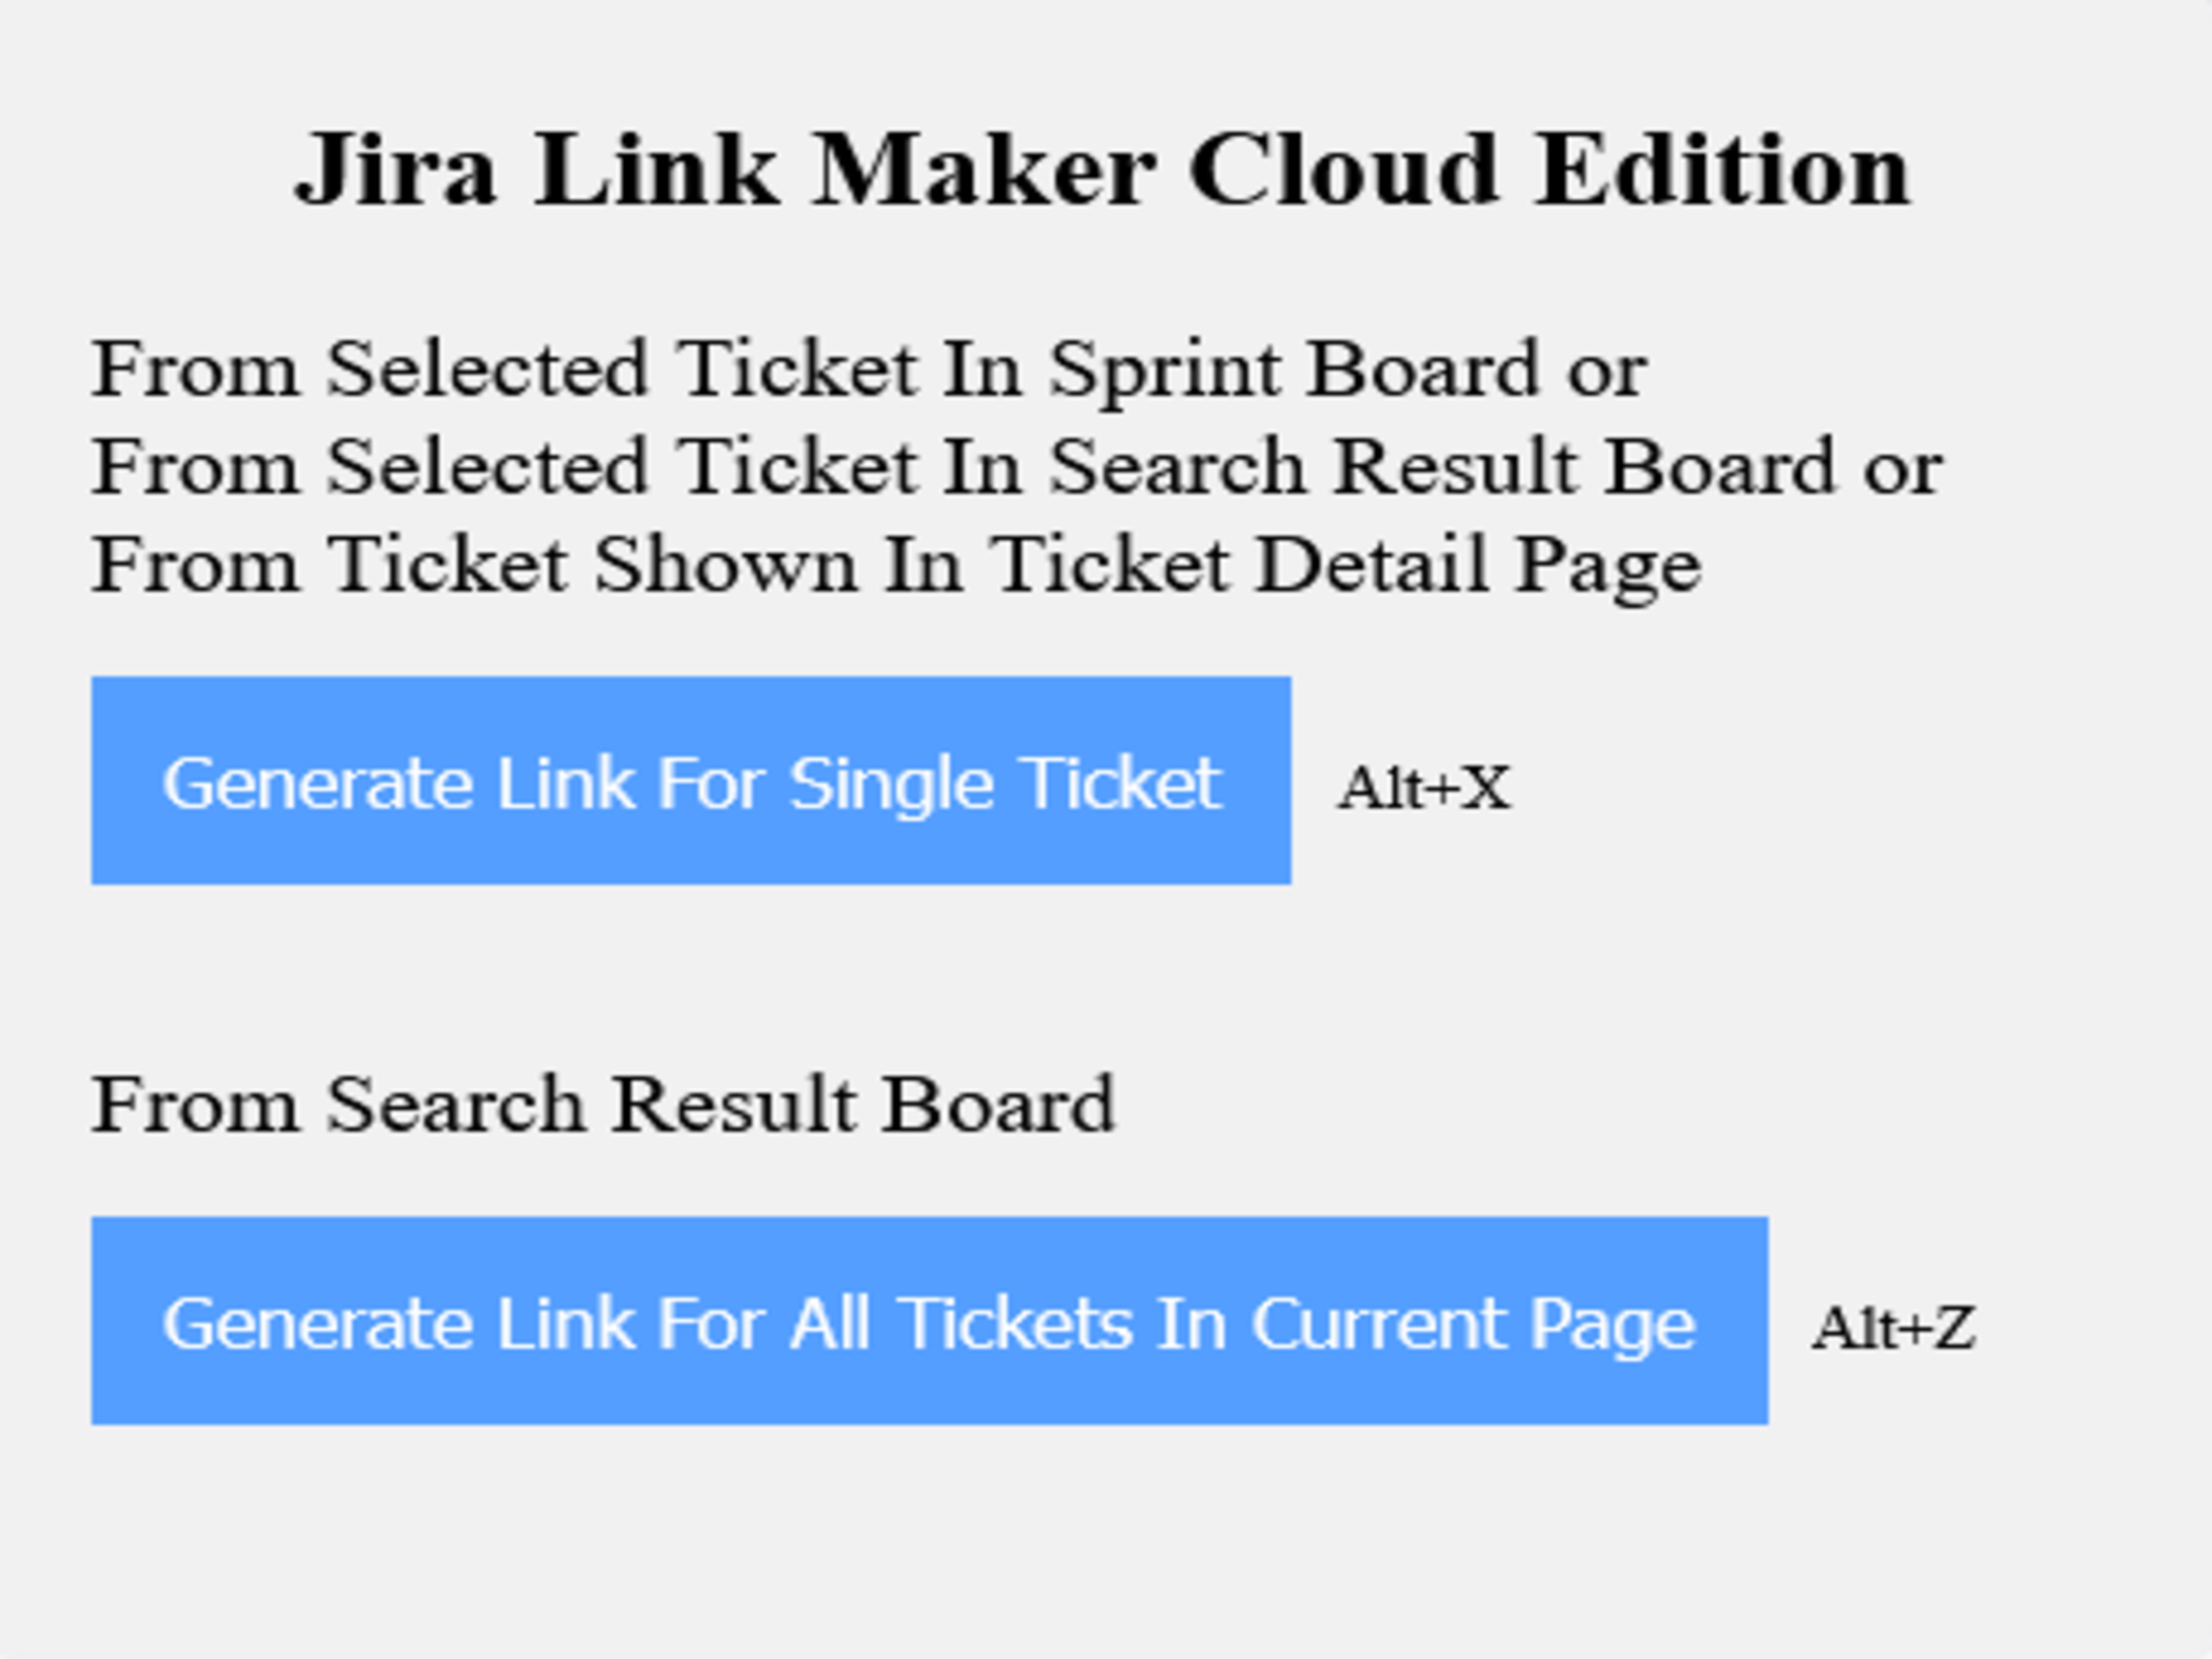 Jira Link Maker Cloud Edition